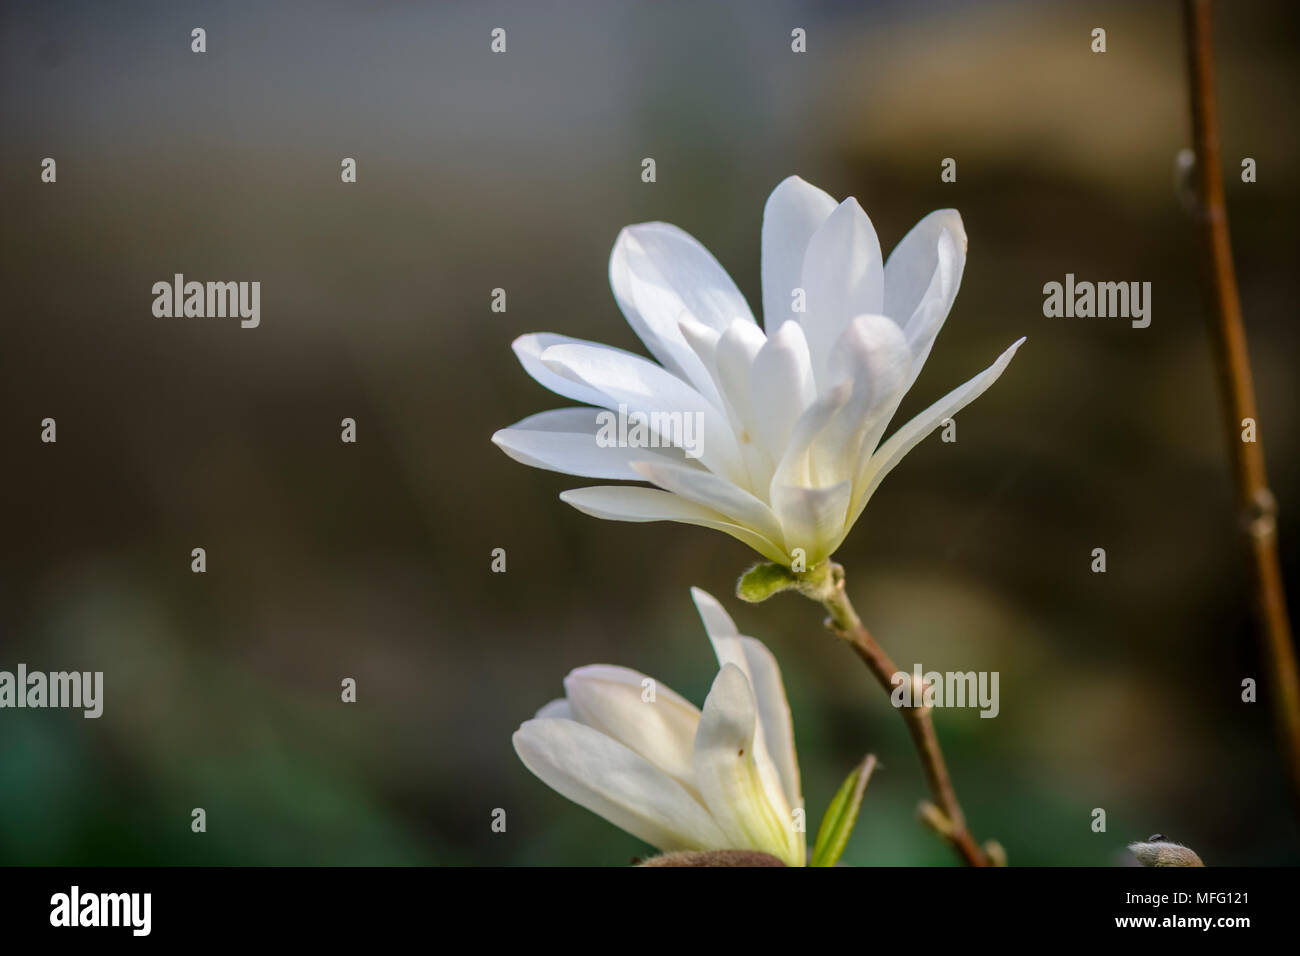 dwarf Magnolia flower against blurry background Stock Photo